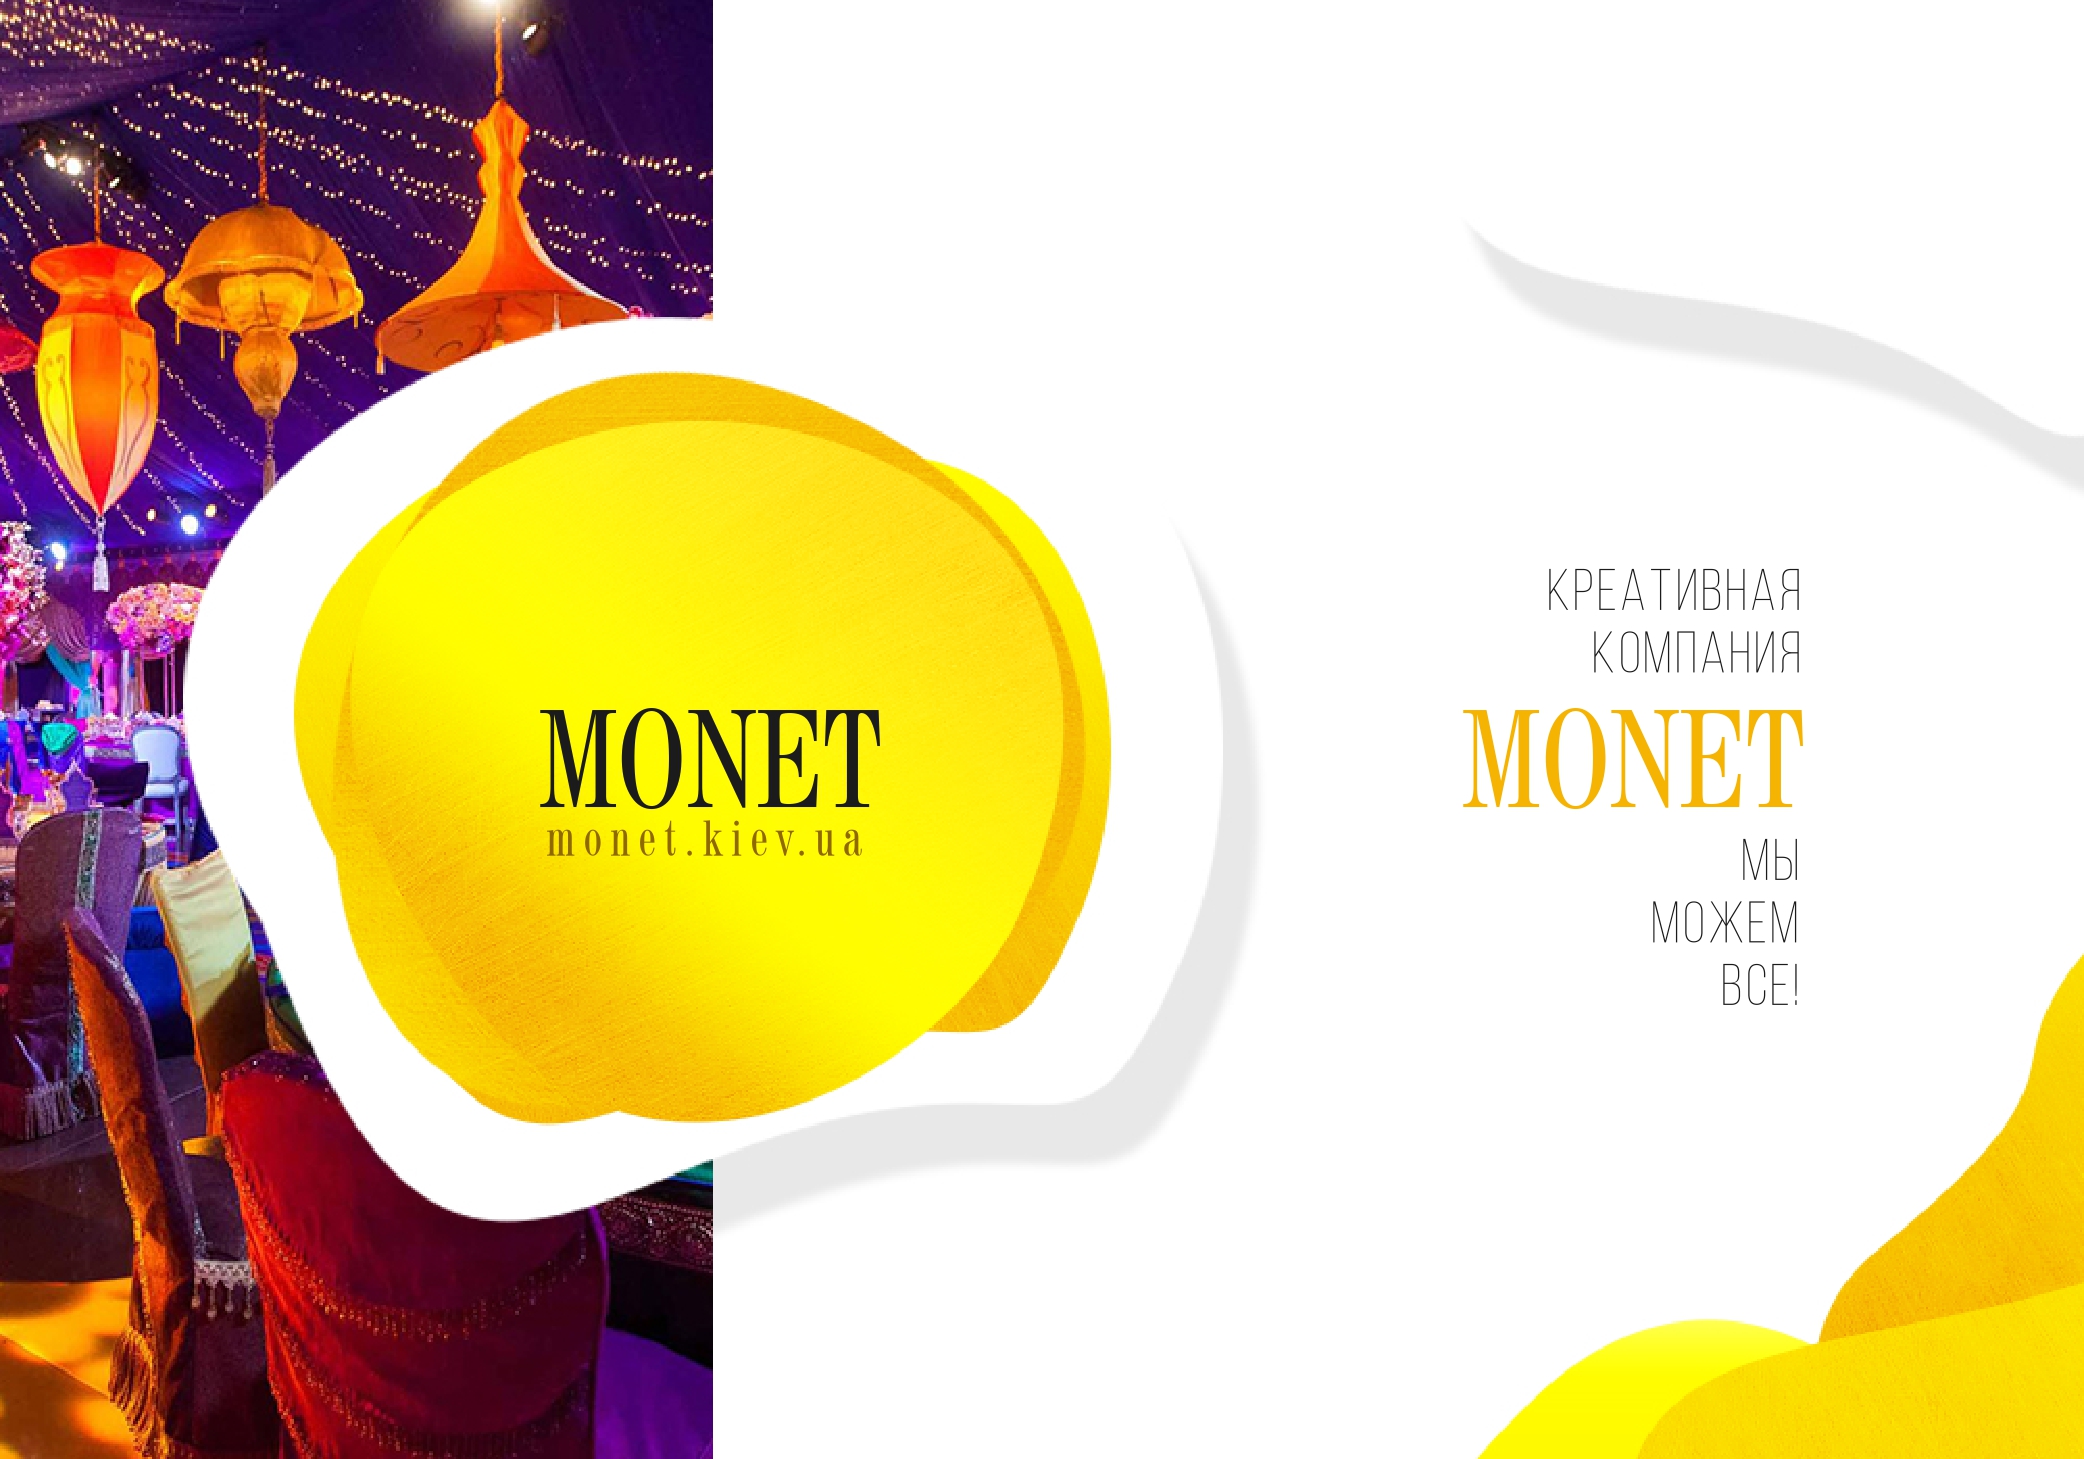 Monet_-_preza-1_page-0001